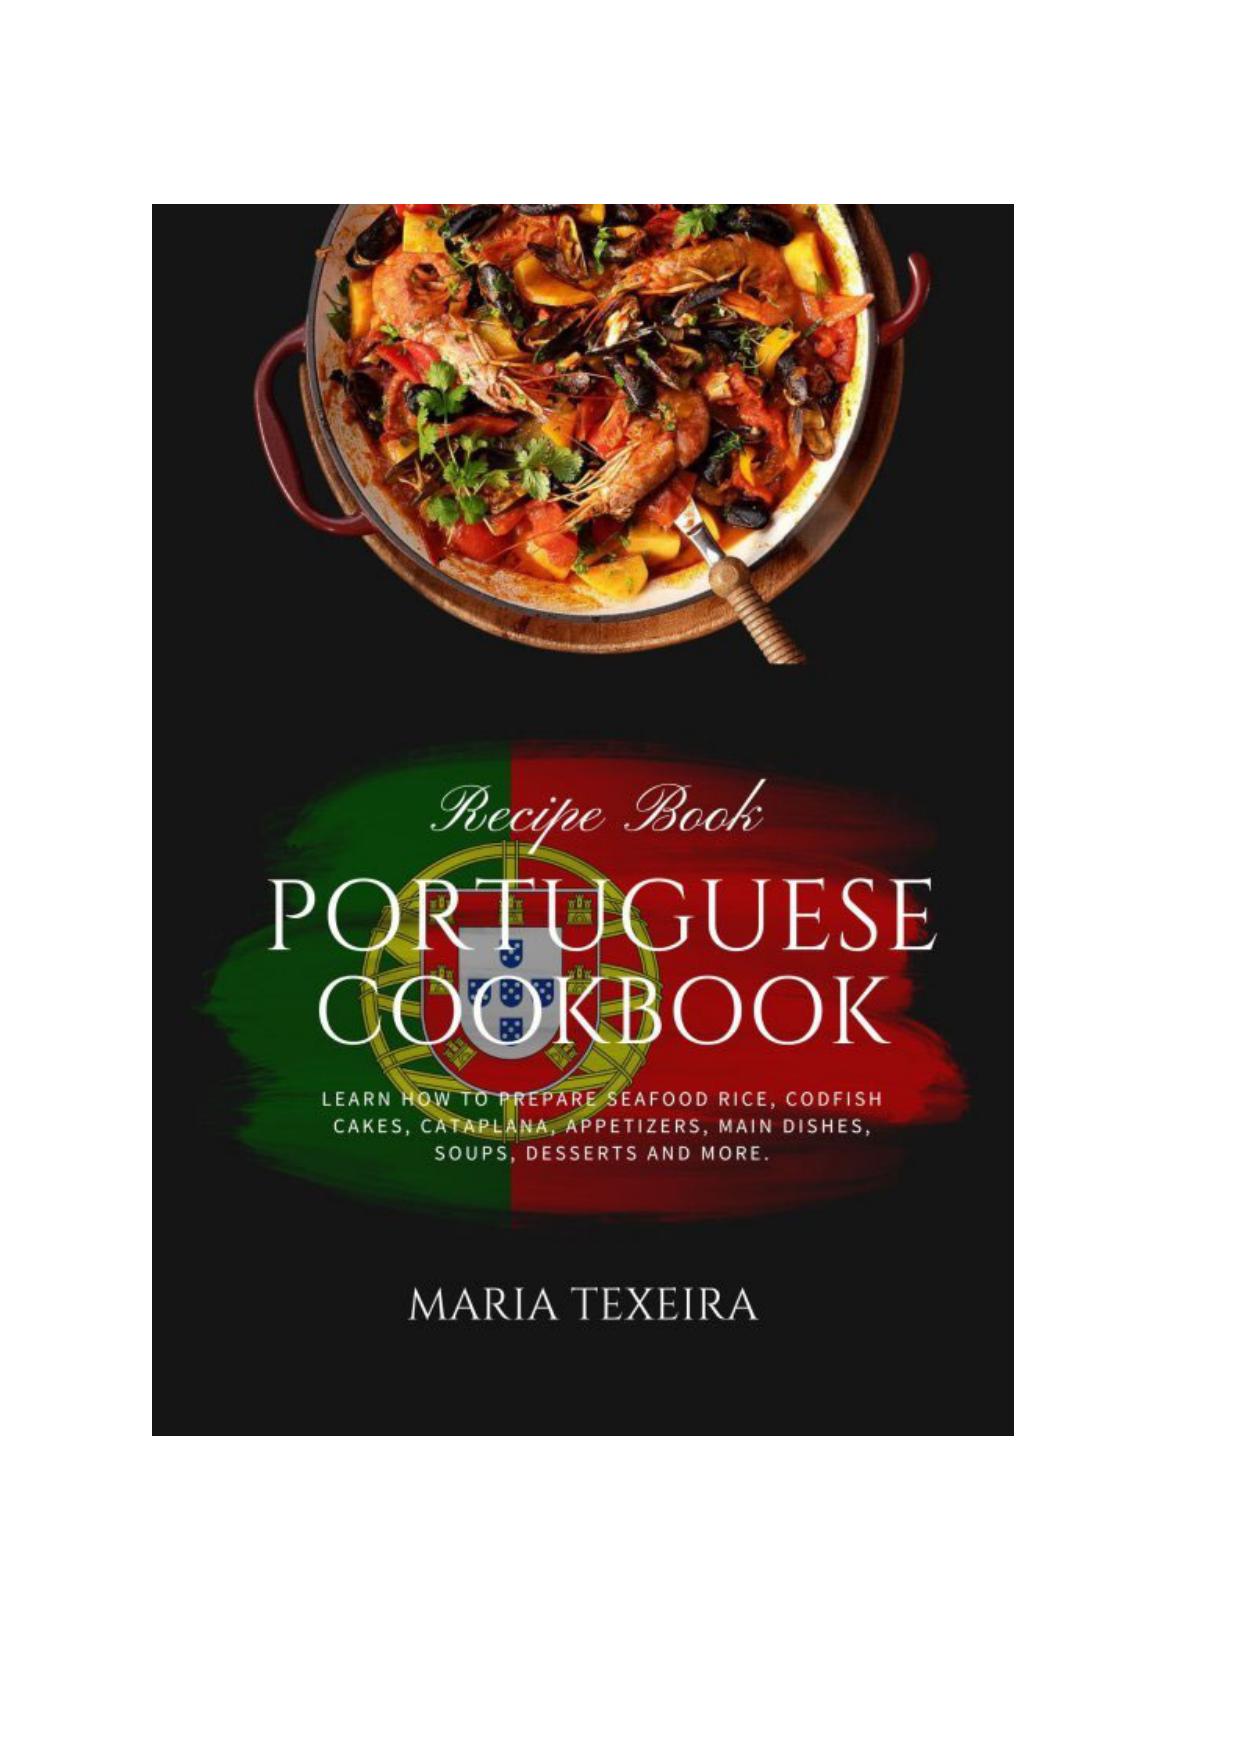 Portuguese Cookbook by Maria Texeira